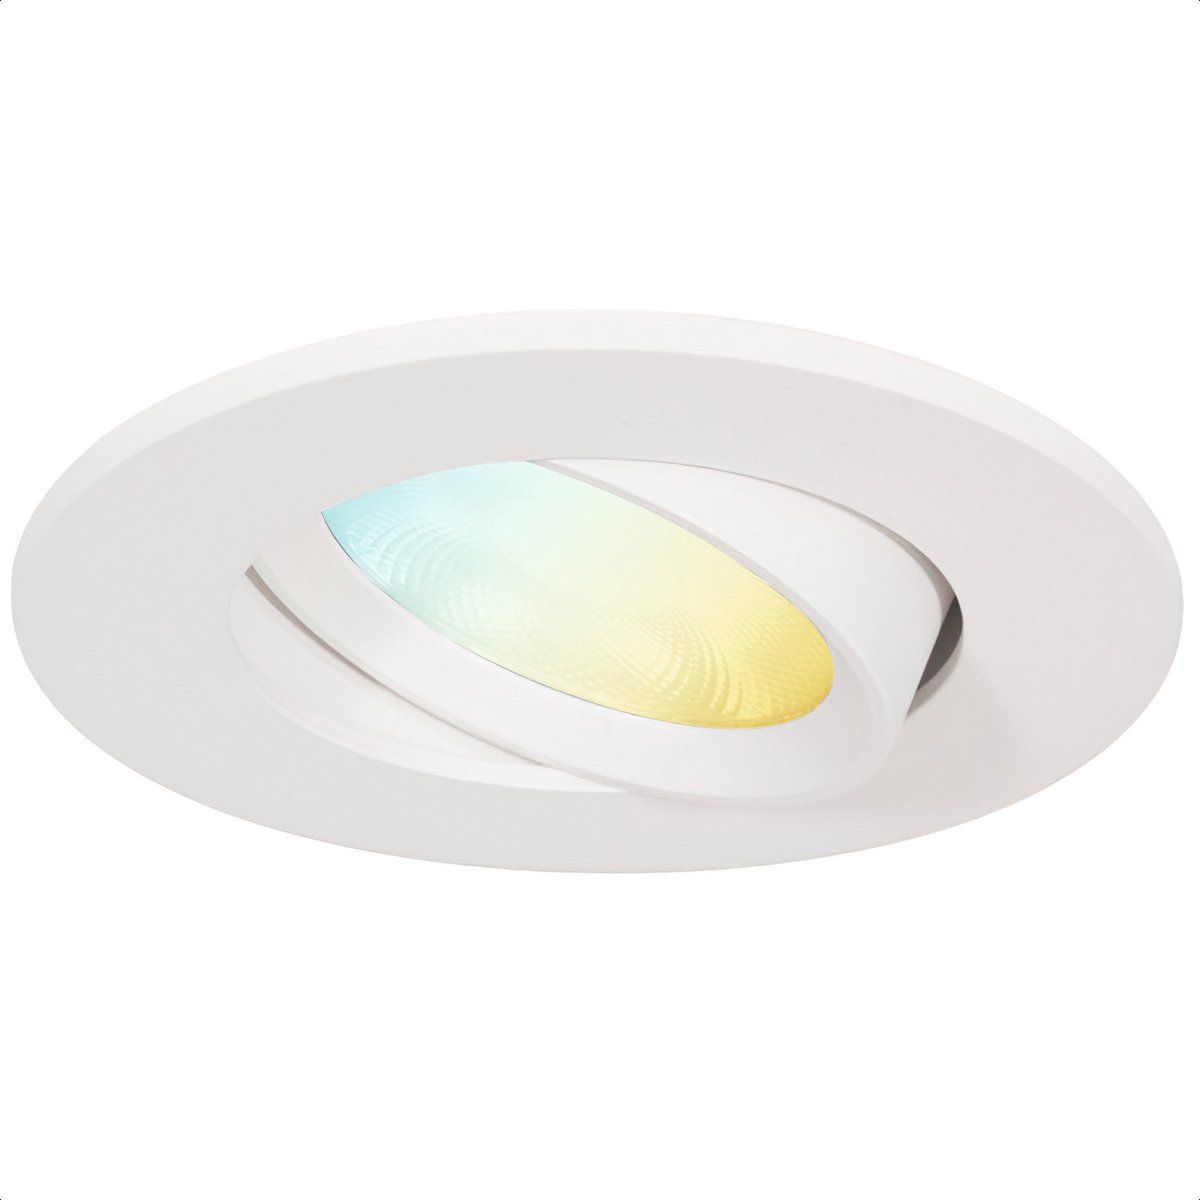 Gologi Slimme Inbouwspots - Smart LED Downlight Dimbaar - Kantelbaar - Warm Wit Licht - Gu10 LED Lamp - Wit